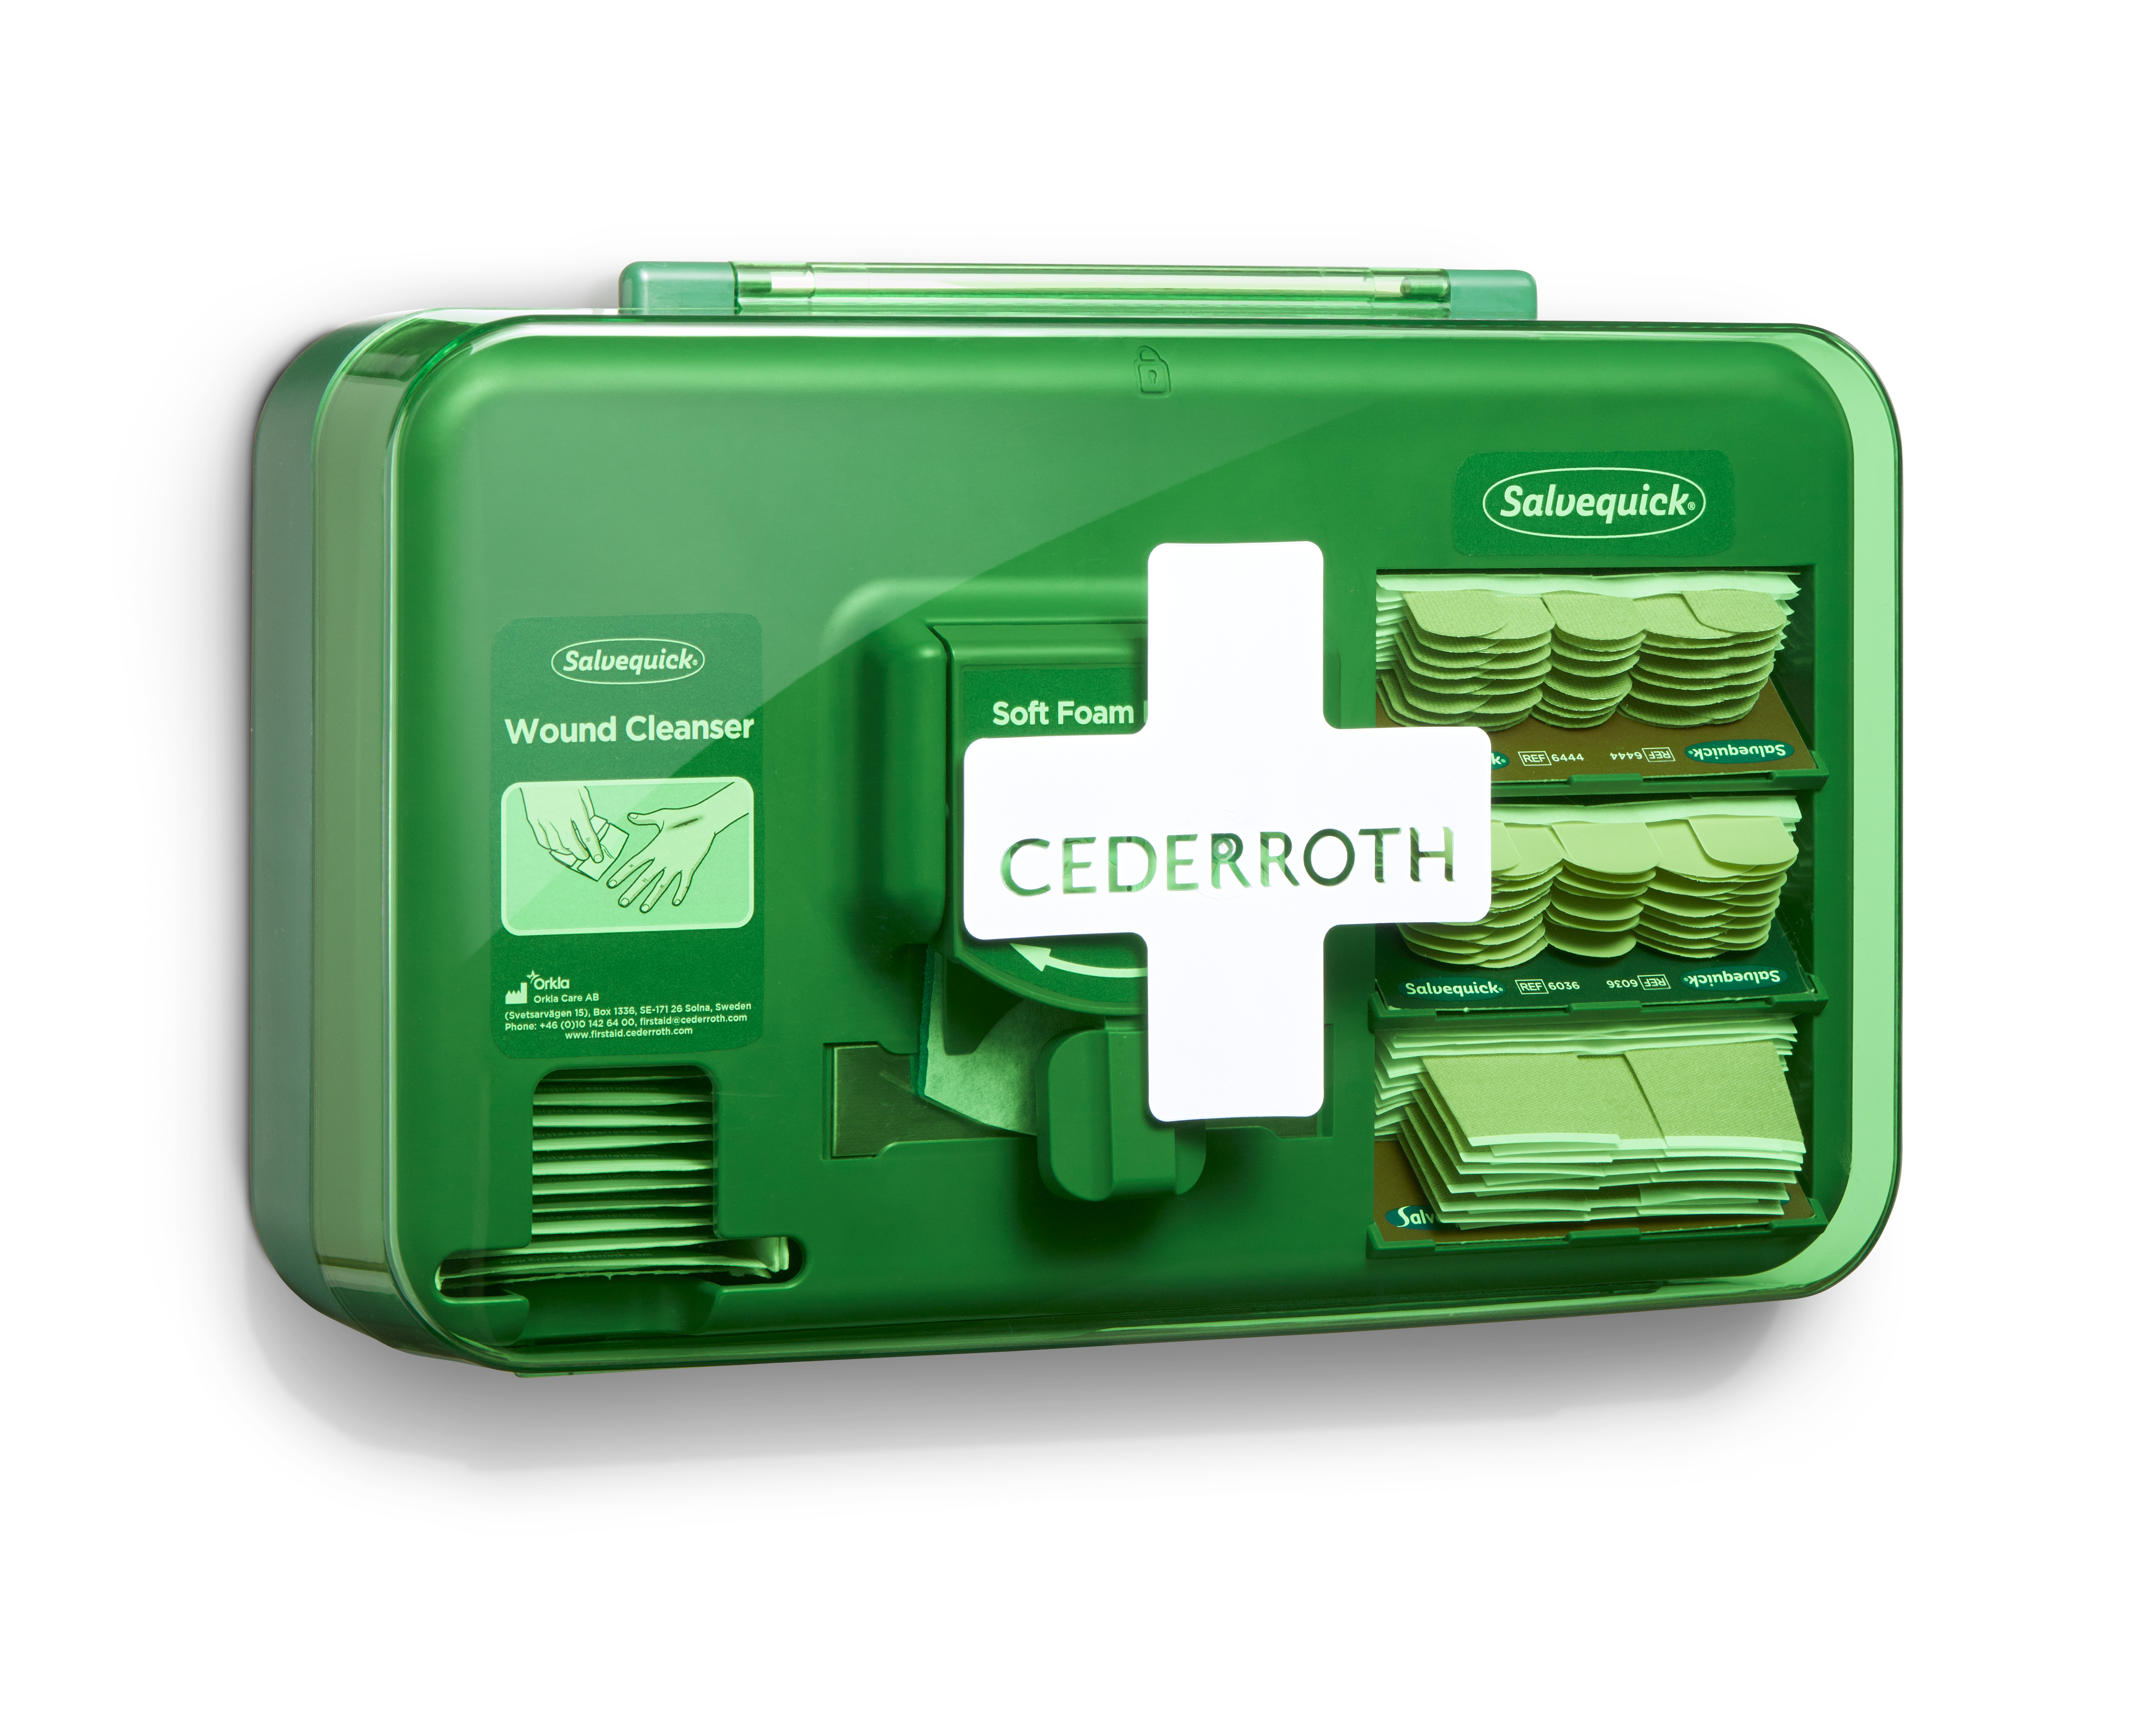 CEDERROTH Wound Care Dispenser